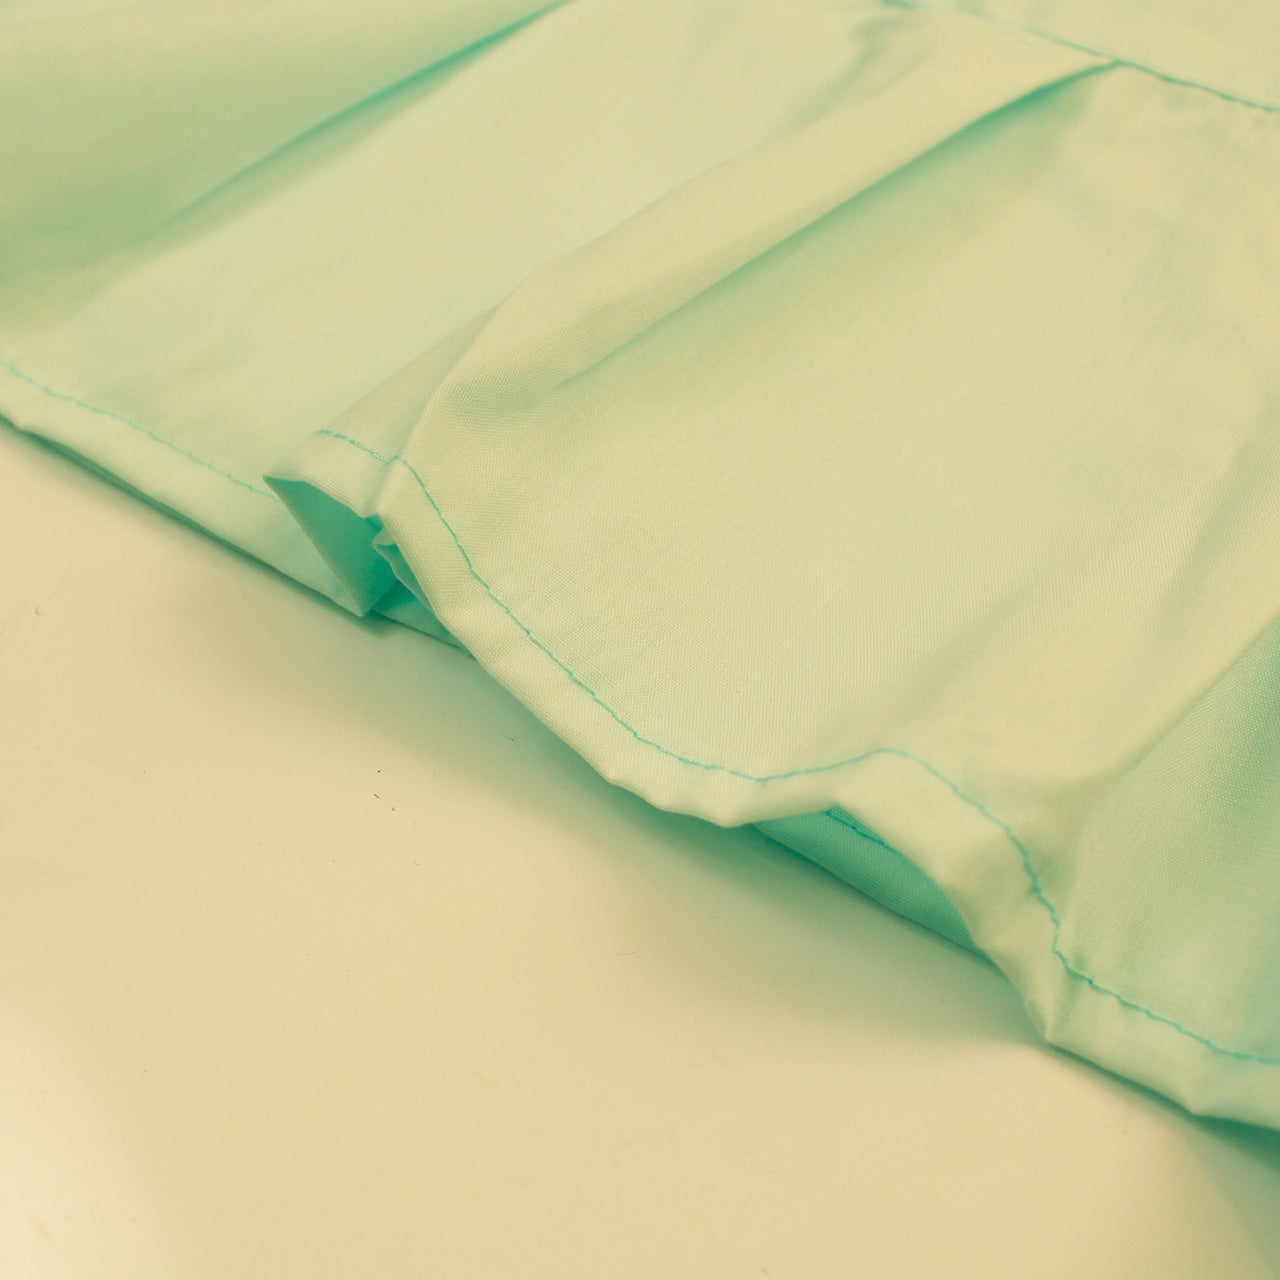 Mint Green - Sari (Saree) Petticoat - Available in S, M, L & XL - Underskirts For Sari's